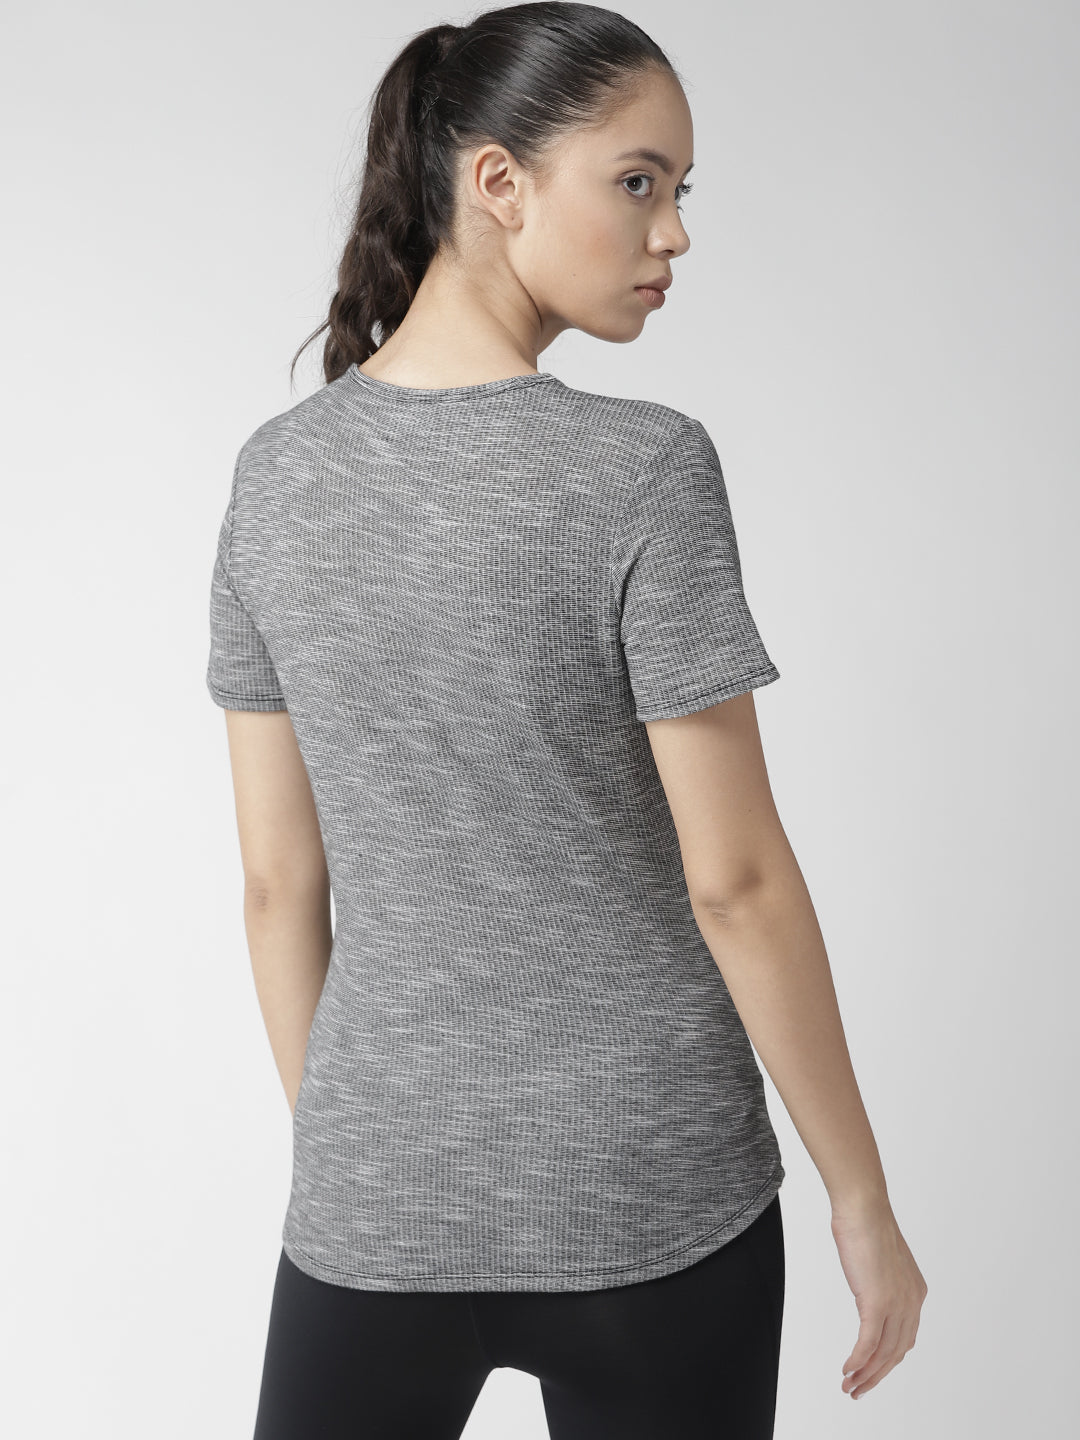 Alcis Women Grey Self-Design Round Neck Training T-shirt